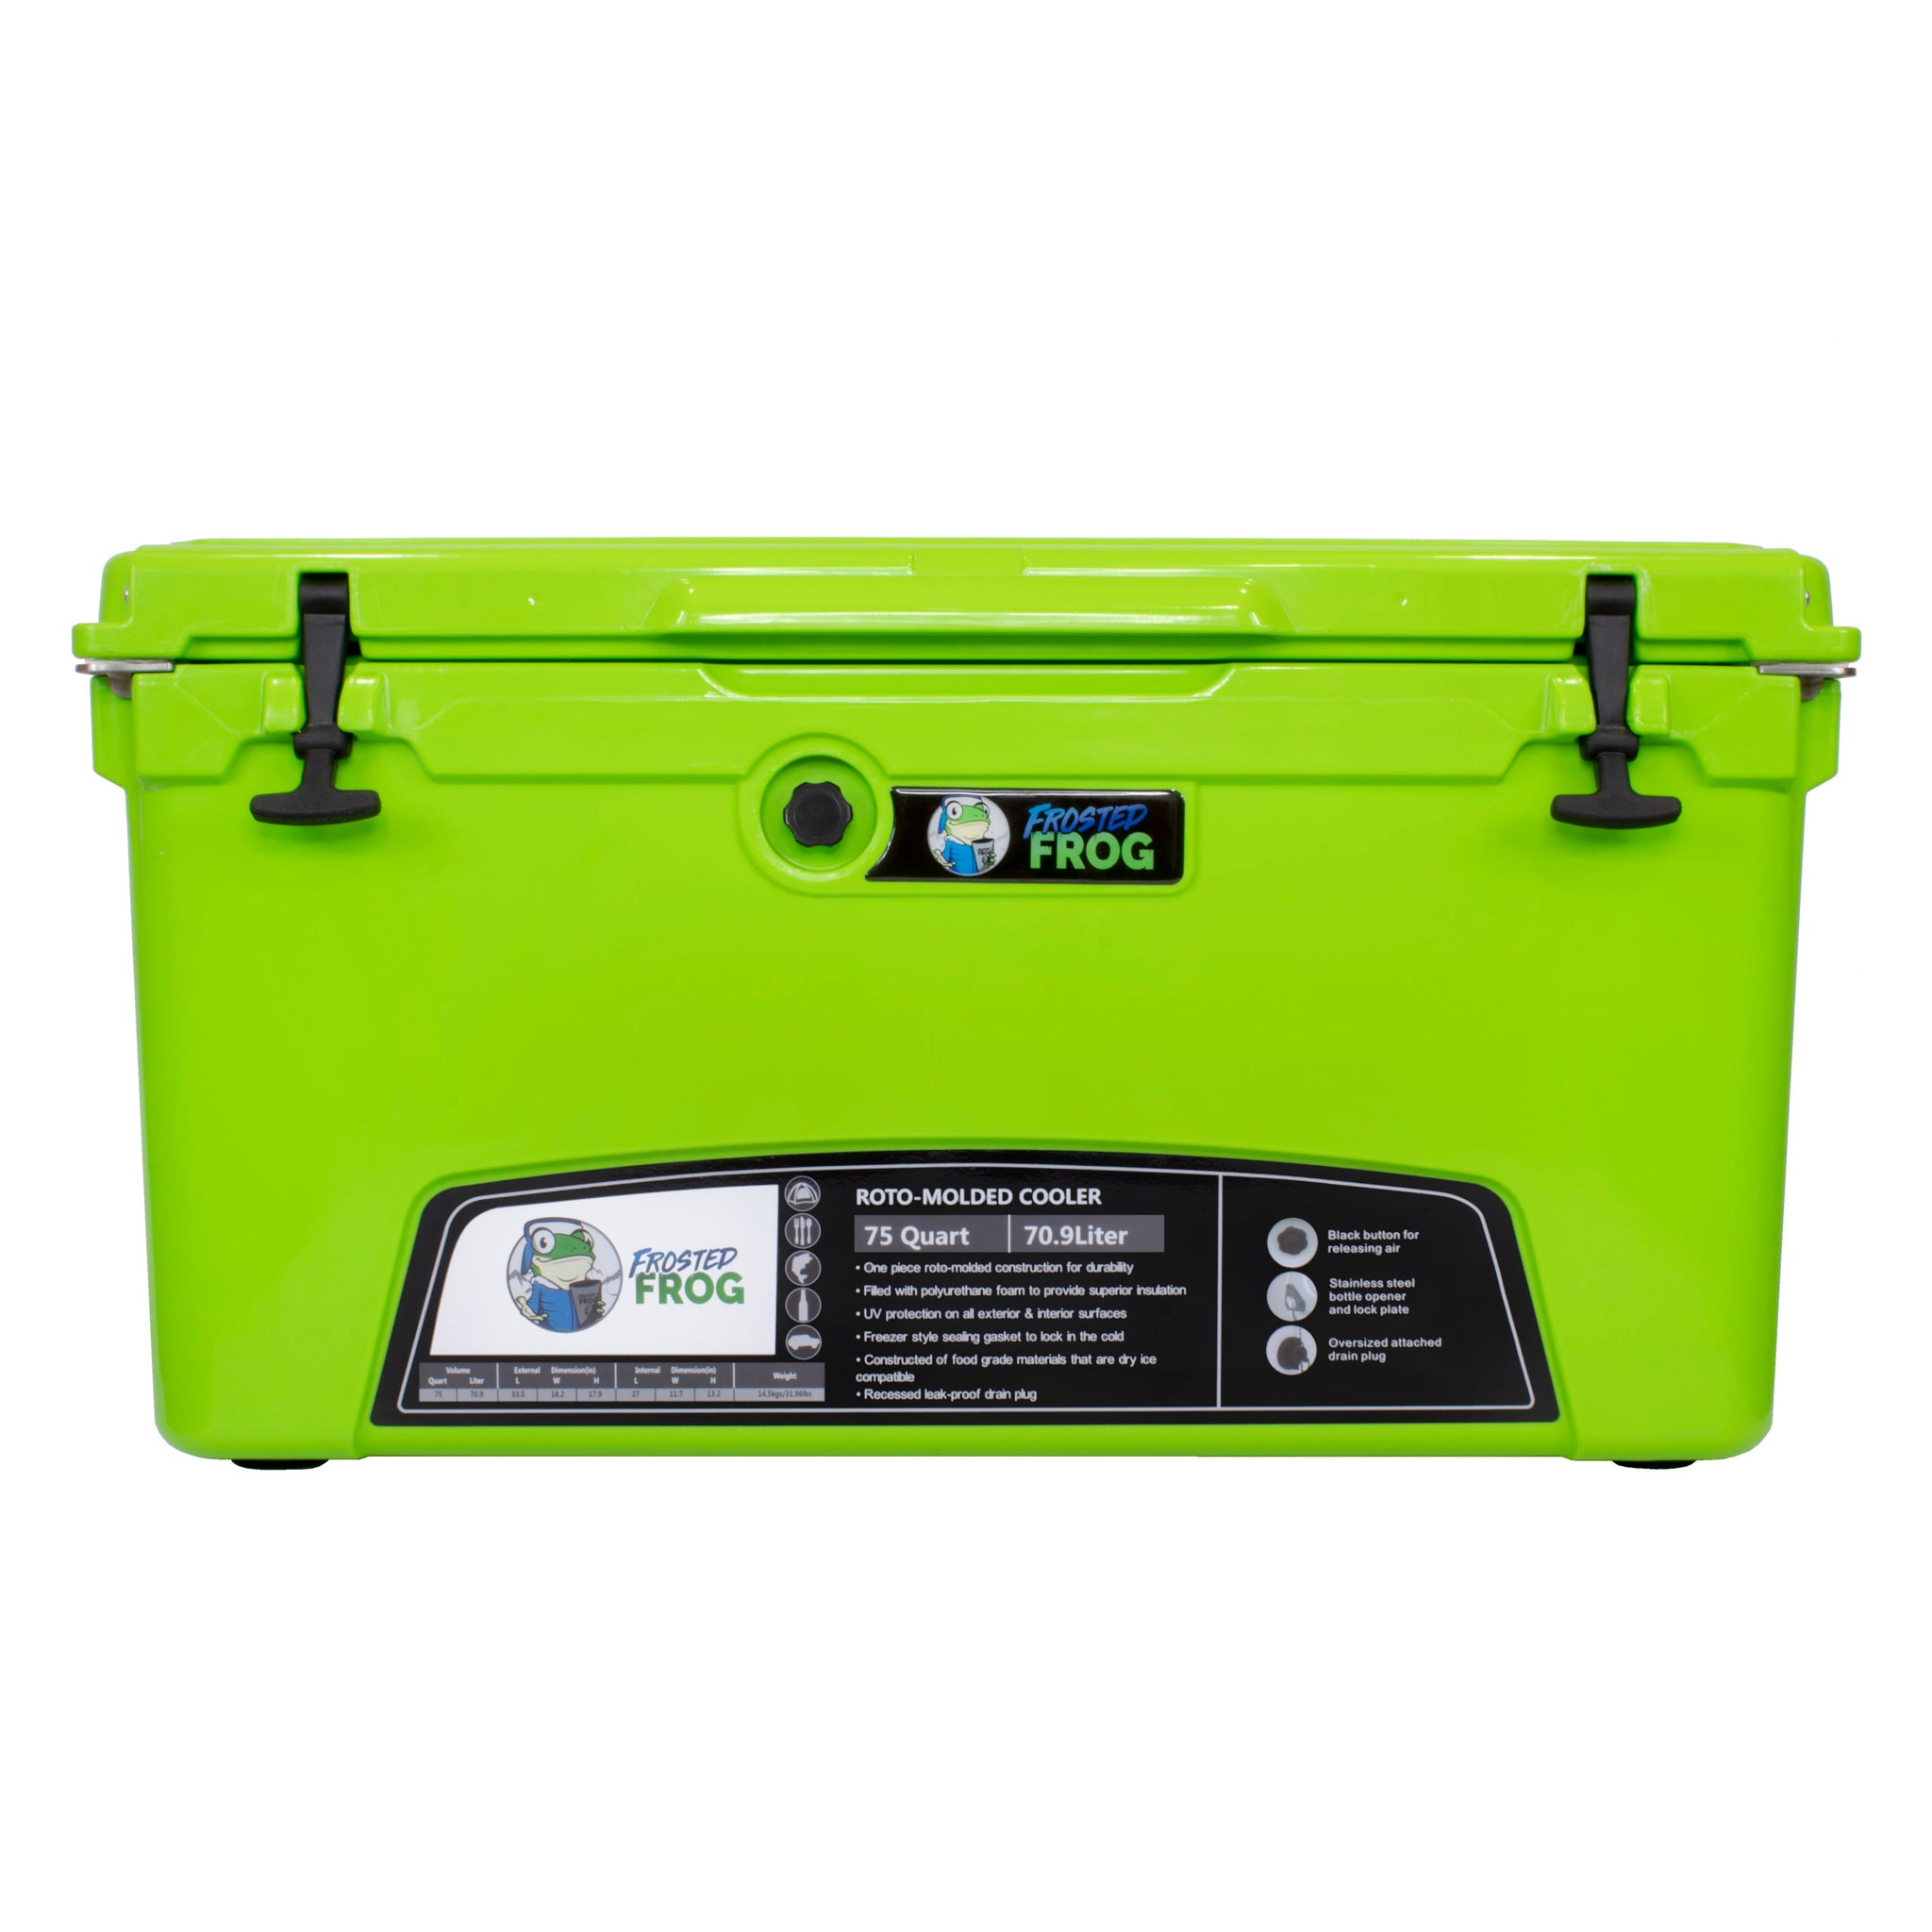 Frosted Frog 75 QT Rotomolded Cooler – Original Green, 75QT – Pro